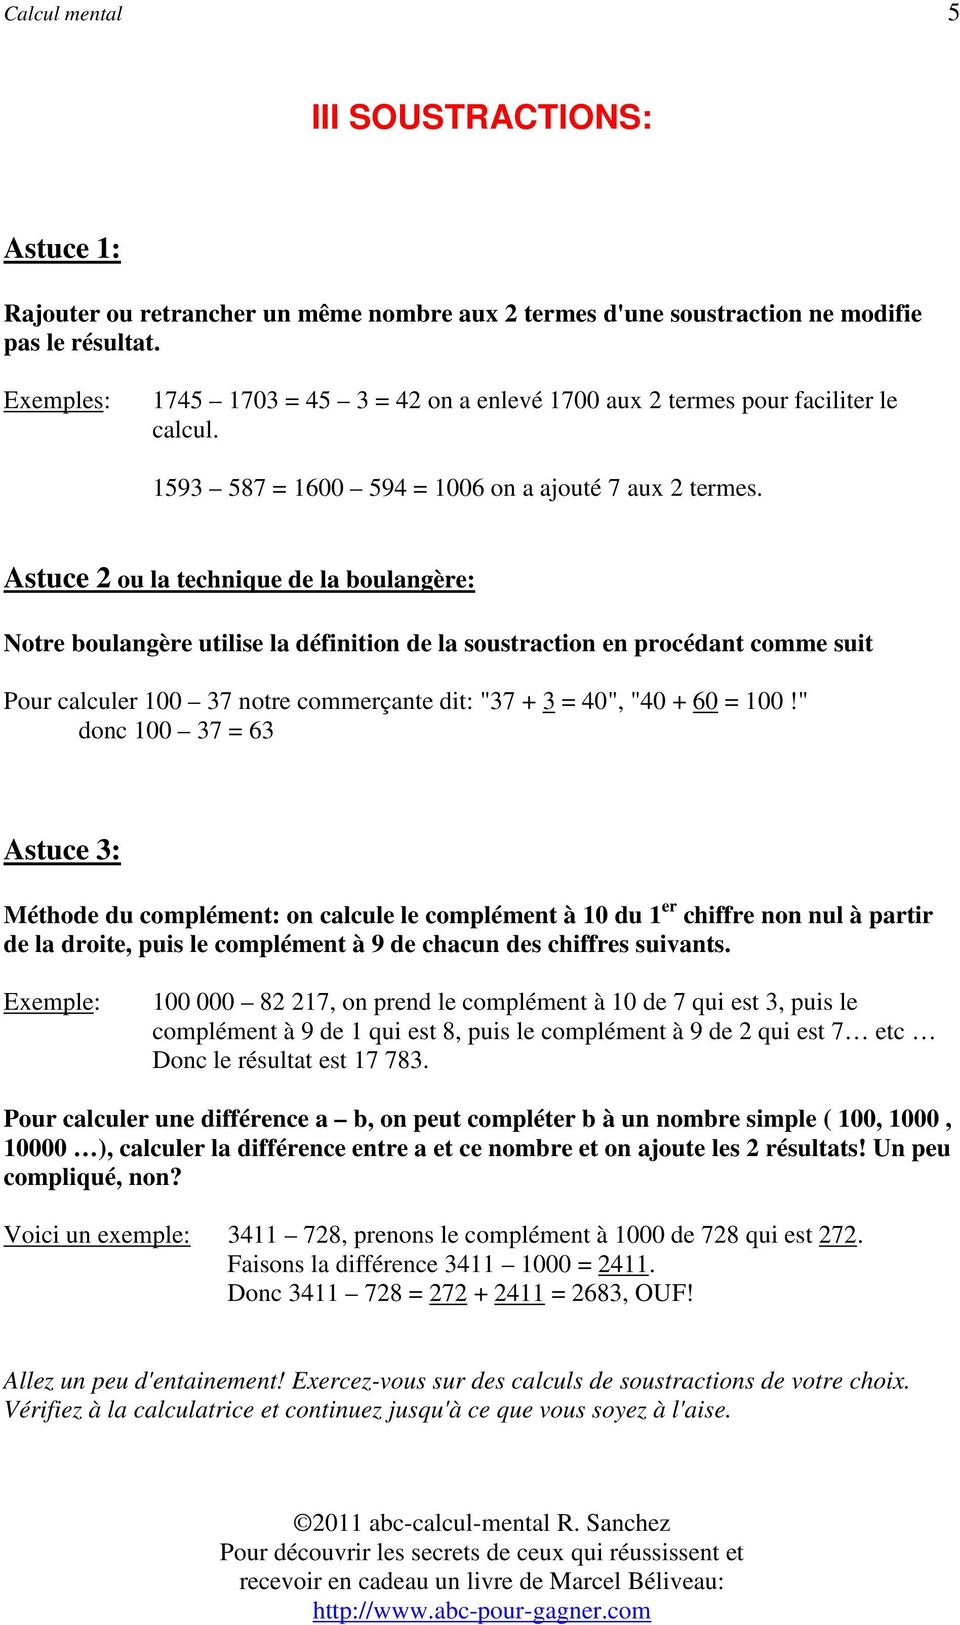 LE CALCUL MENTAL COMMENT SE PASSER DE LA CALCULATRICE - PDF Free Download